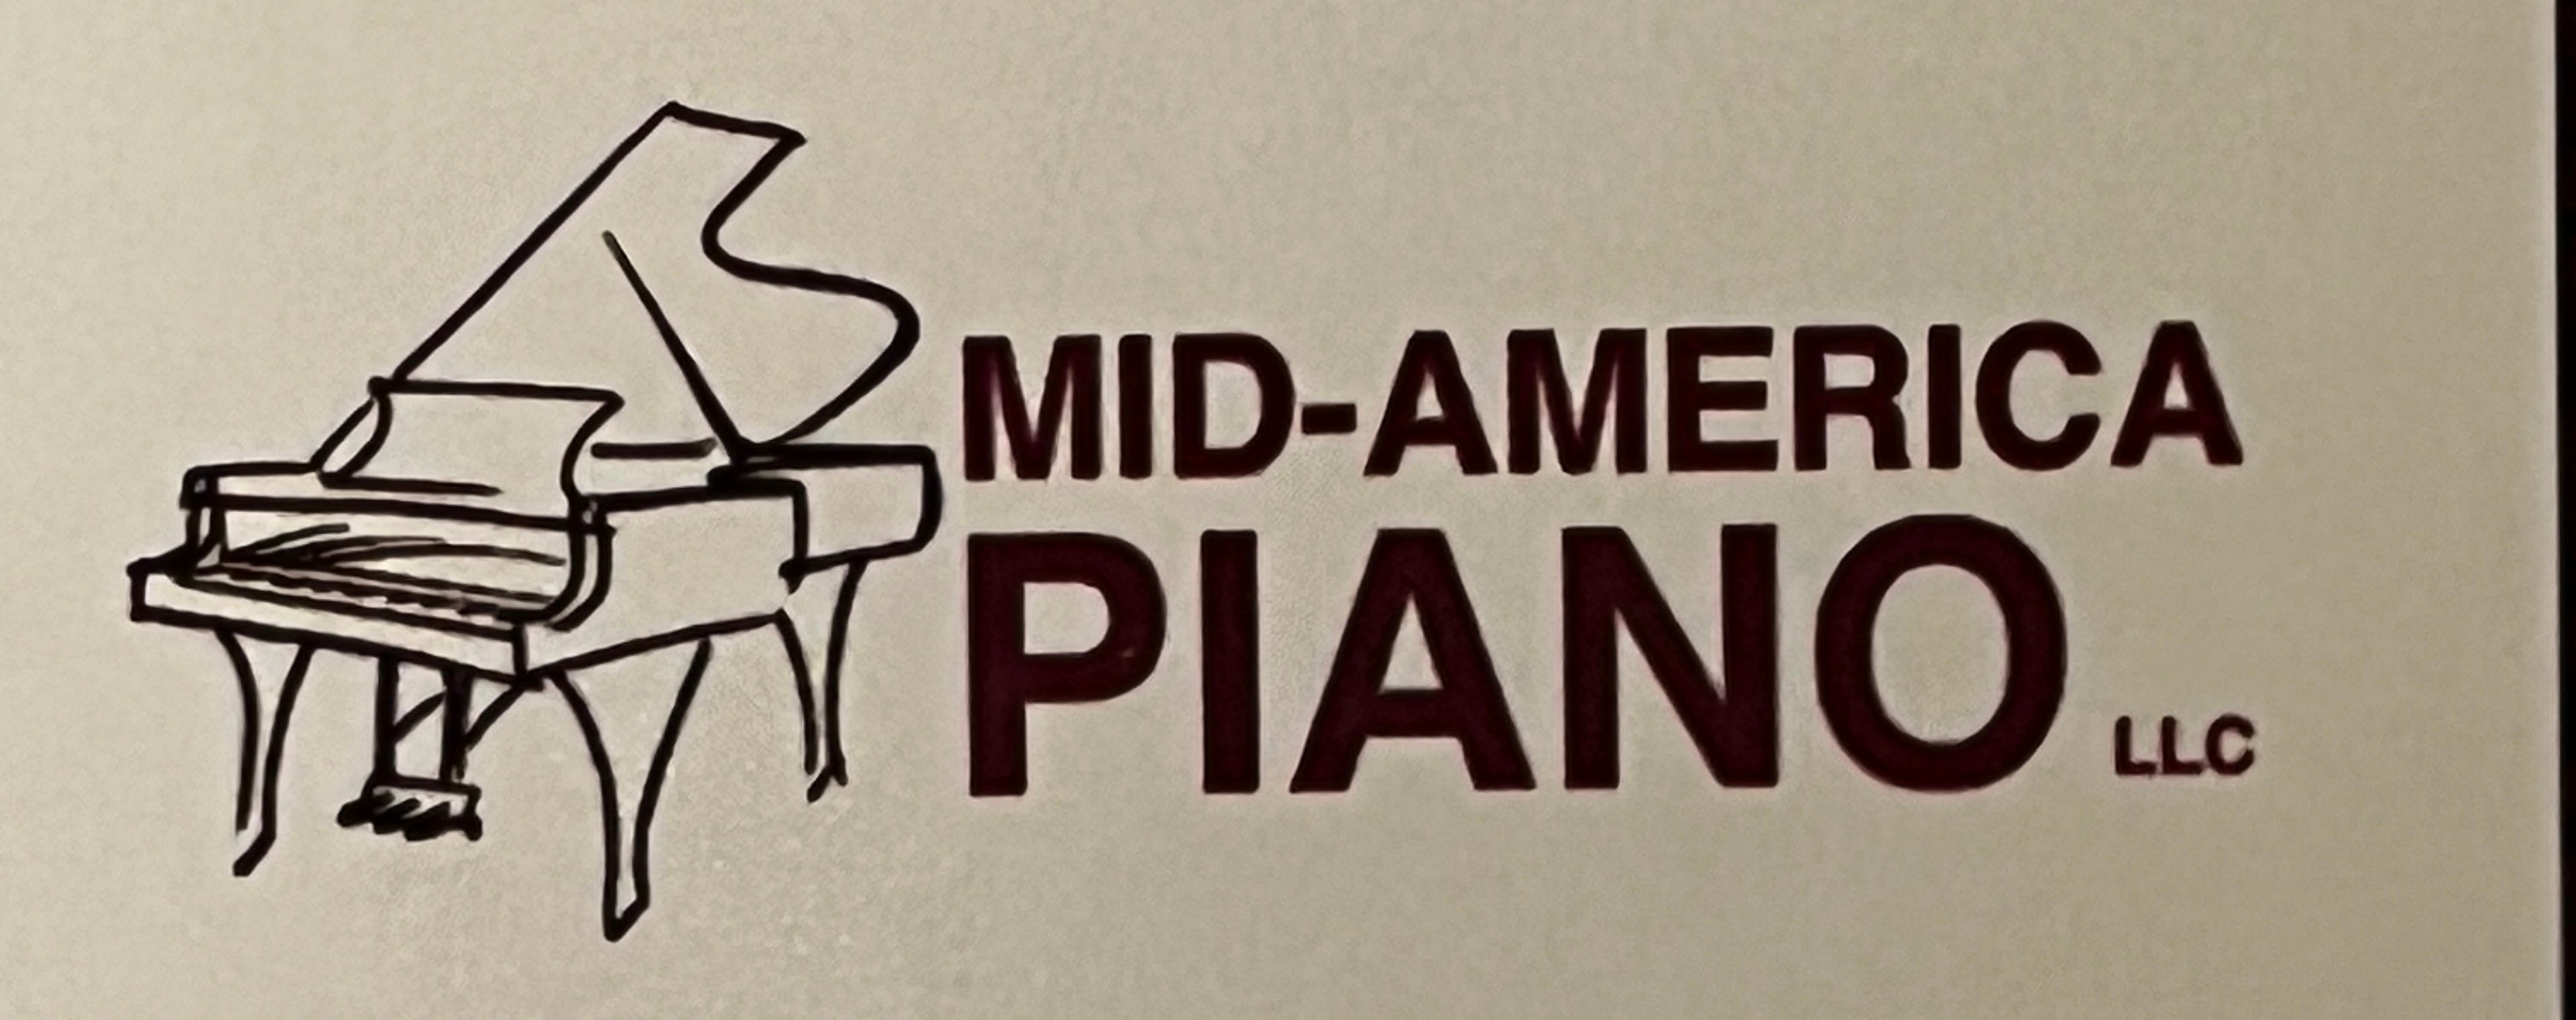 Mid-America Piano, LLC logo